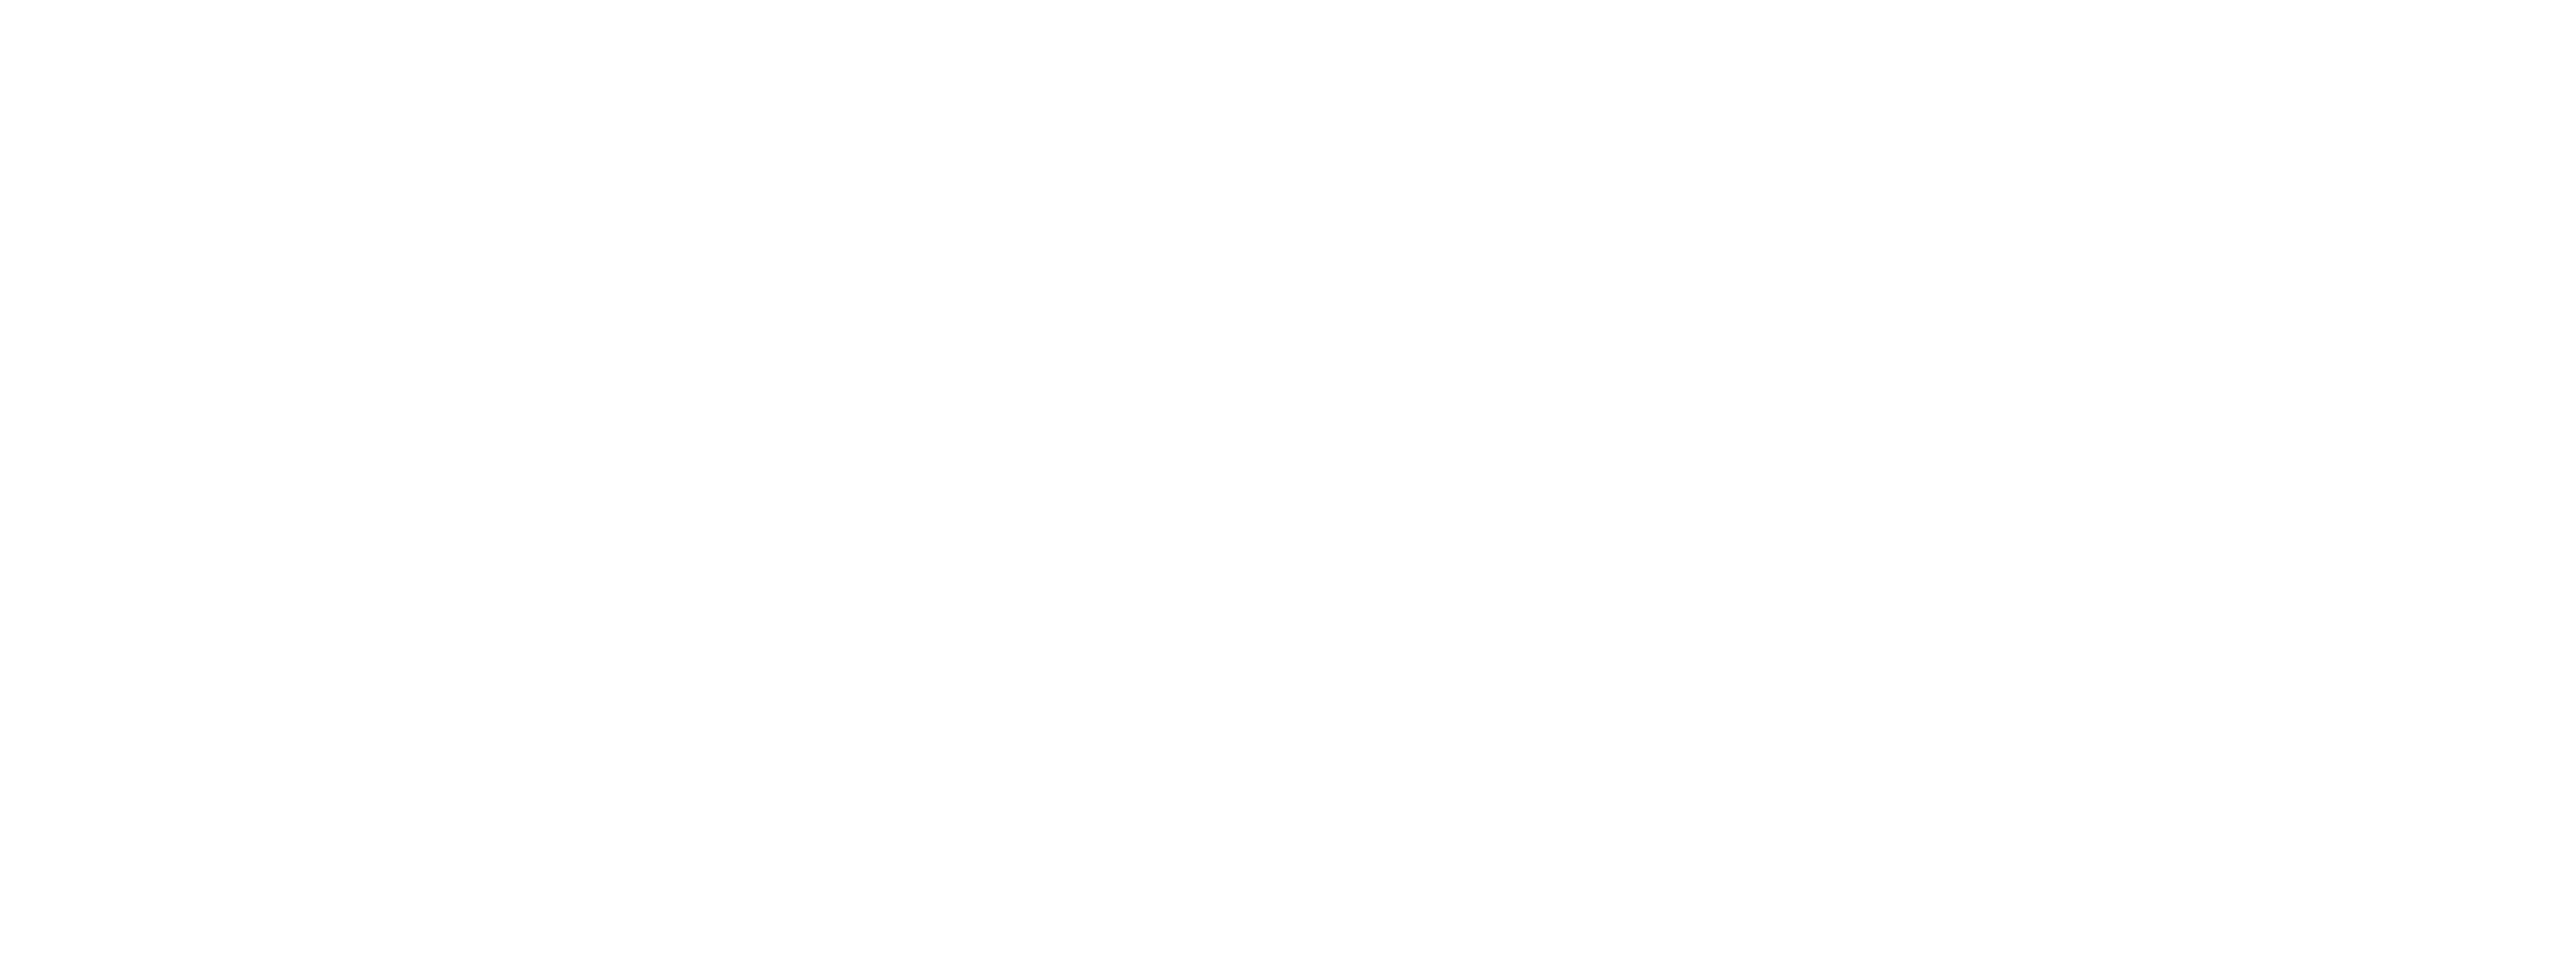 Harbour Lifestyle logo